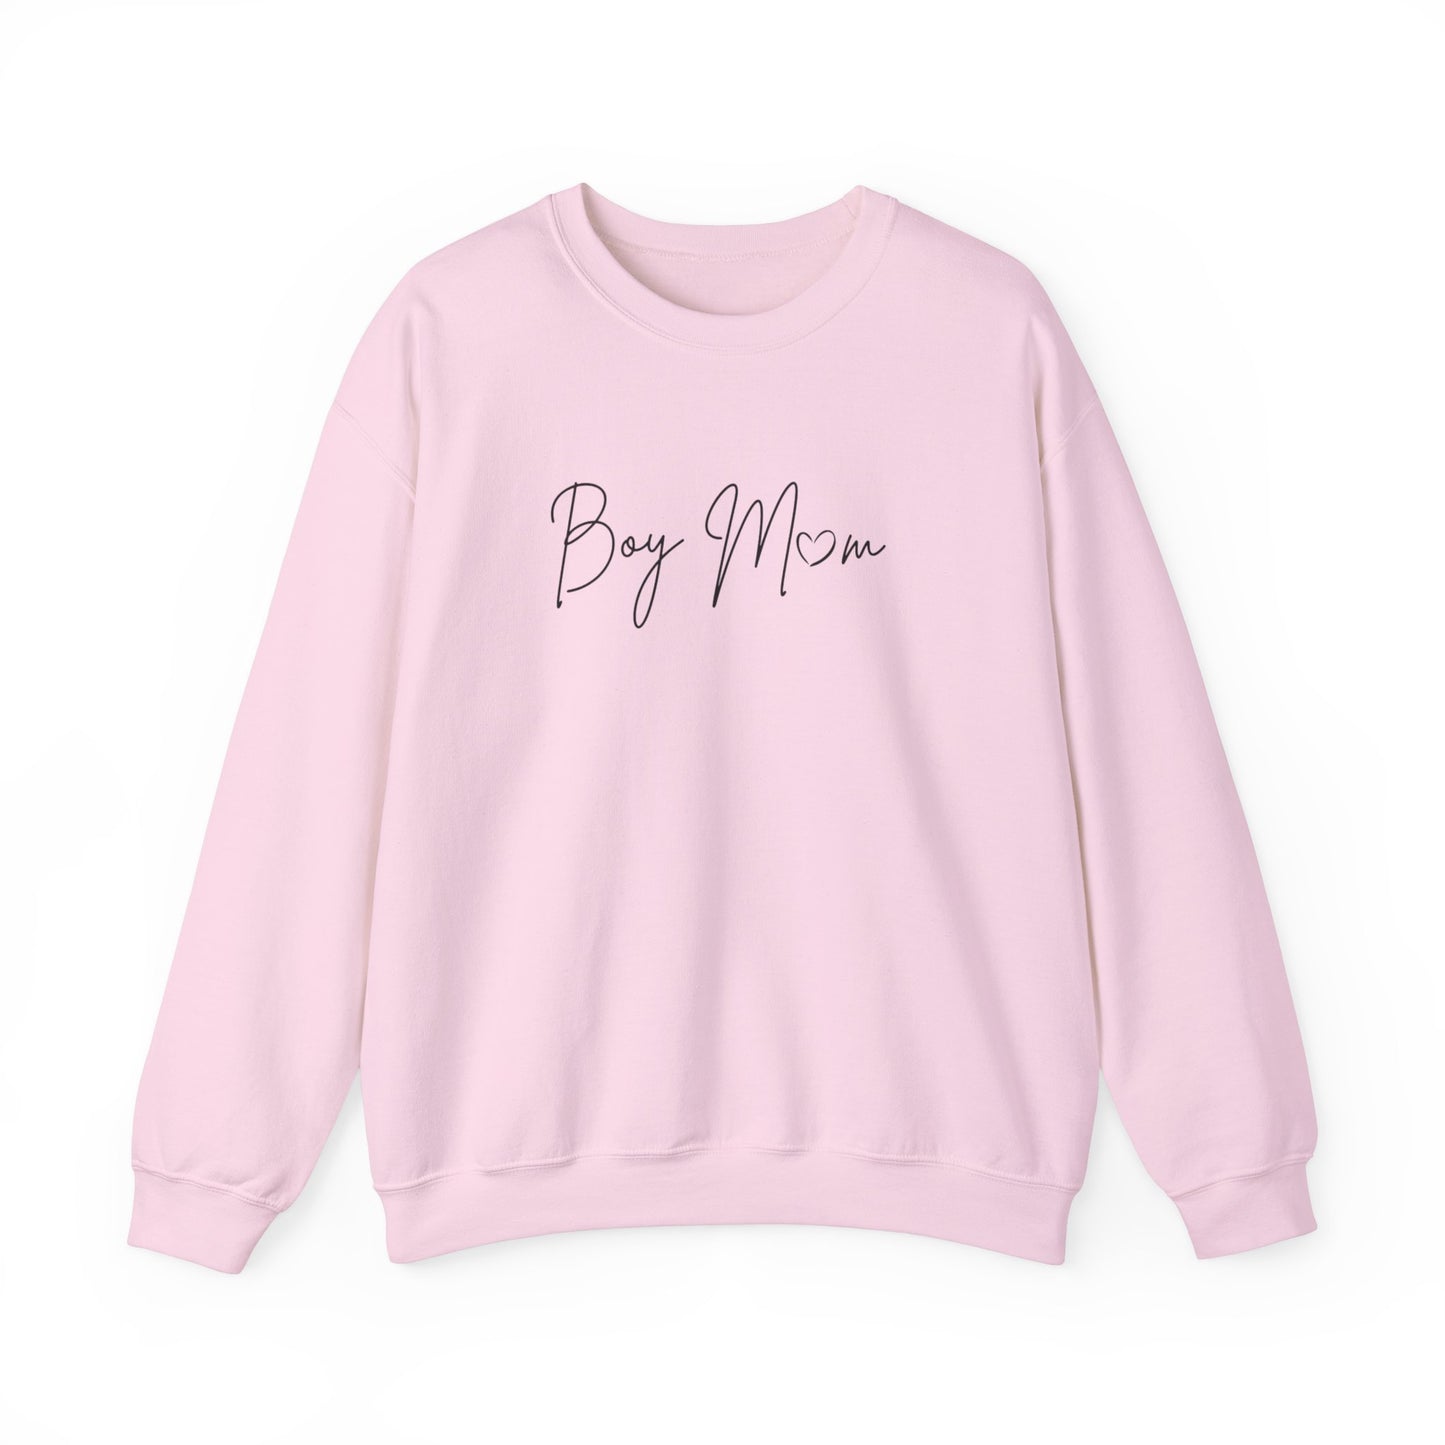 "Boy Mom" Crewneck Sweatshirt